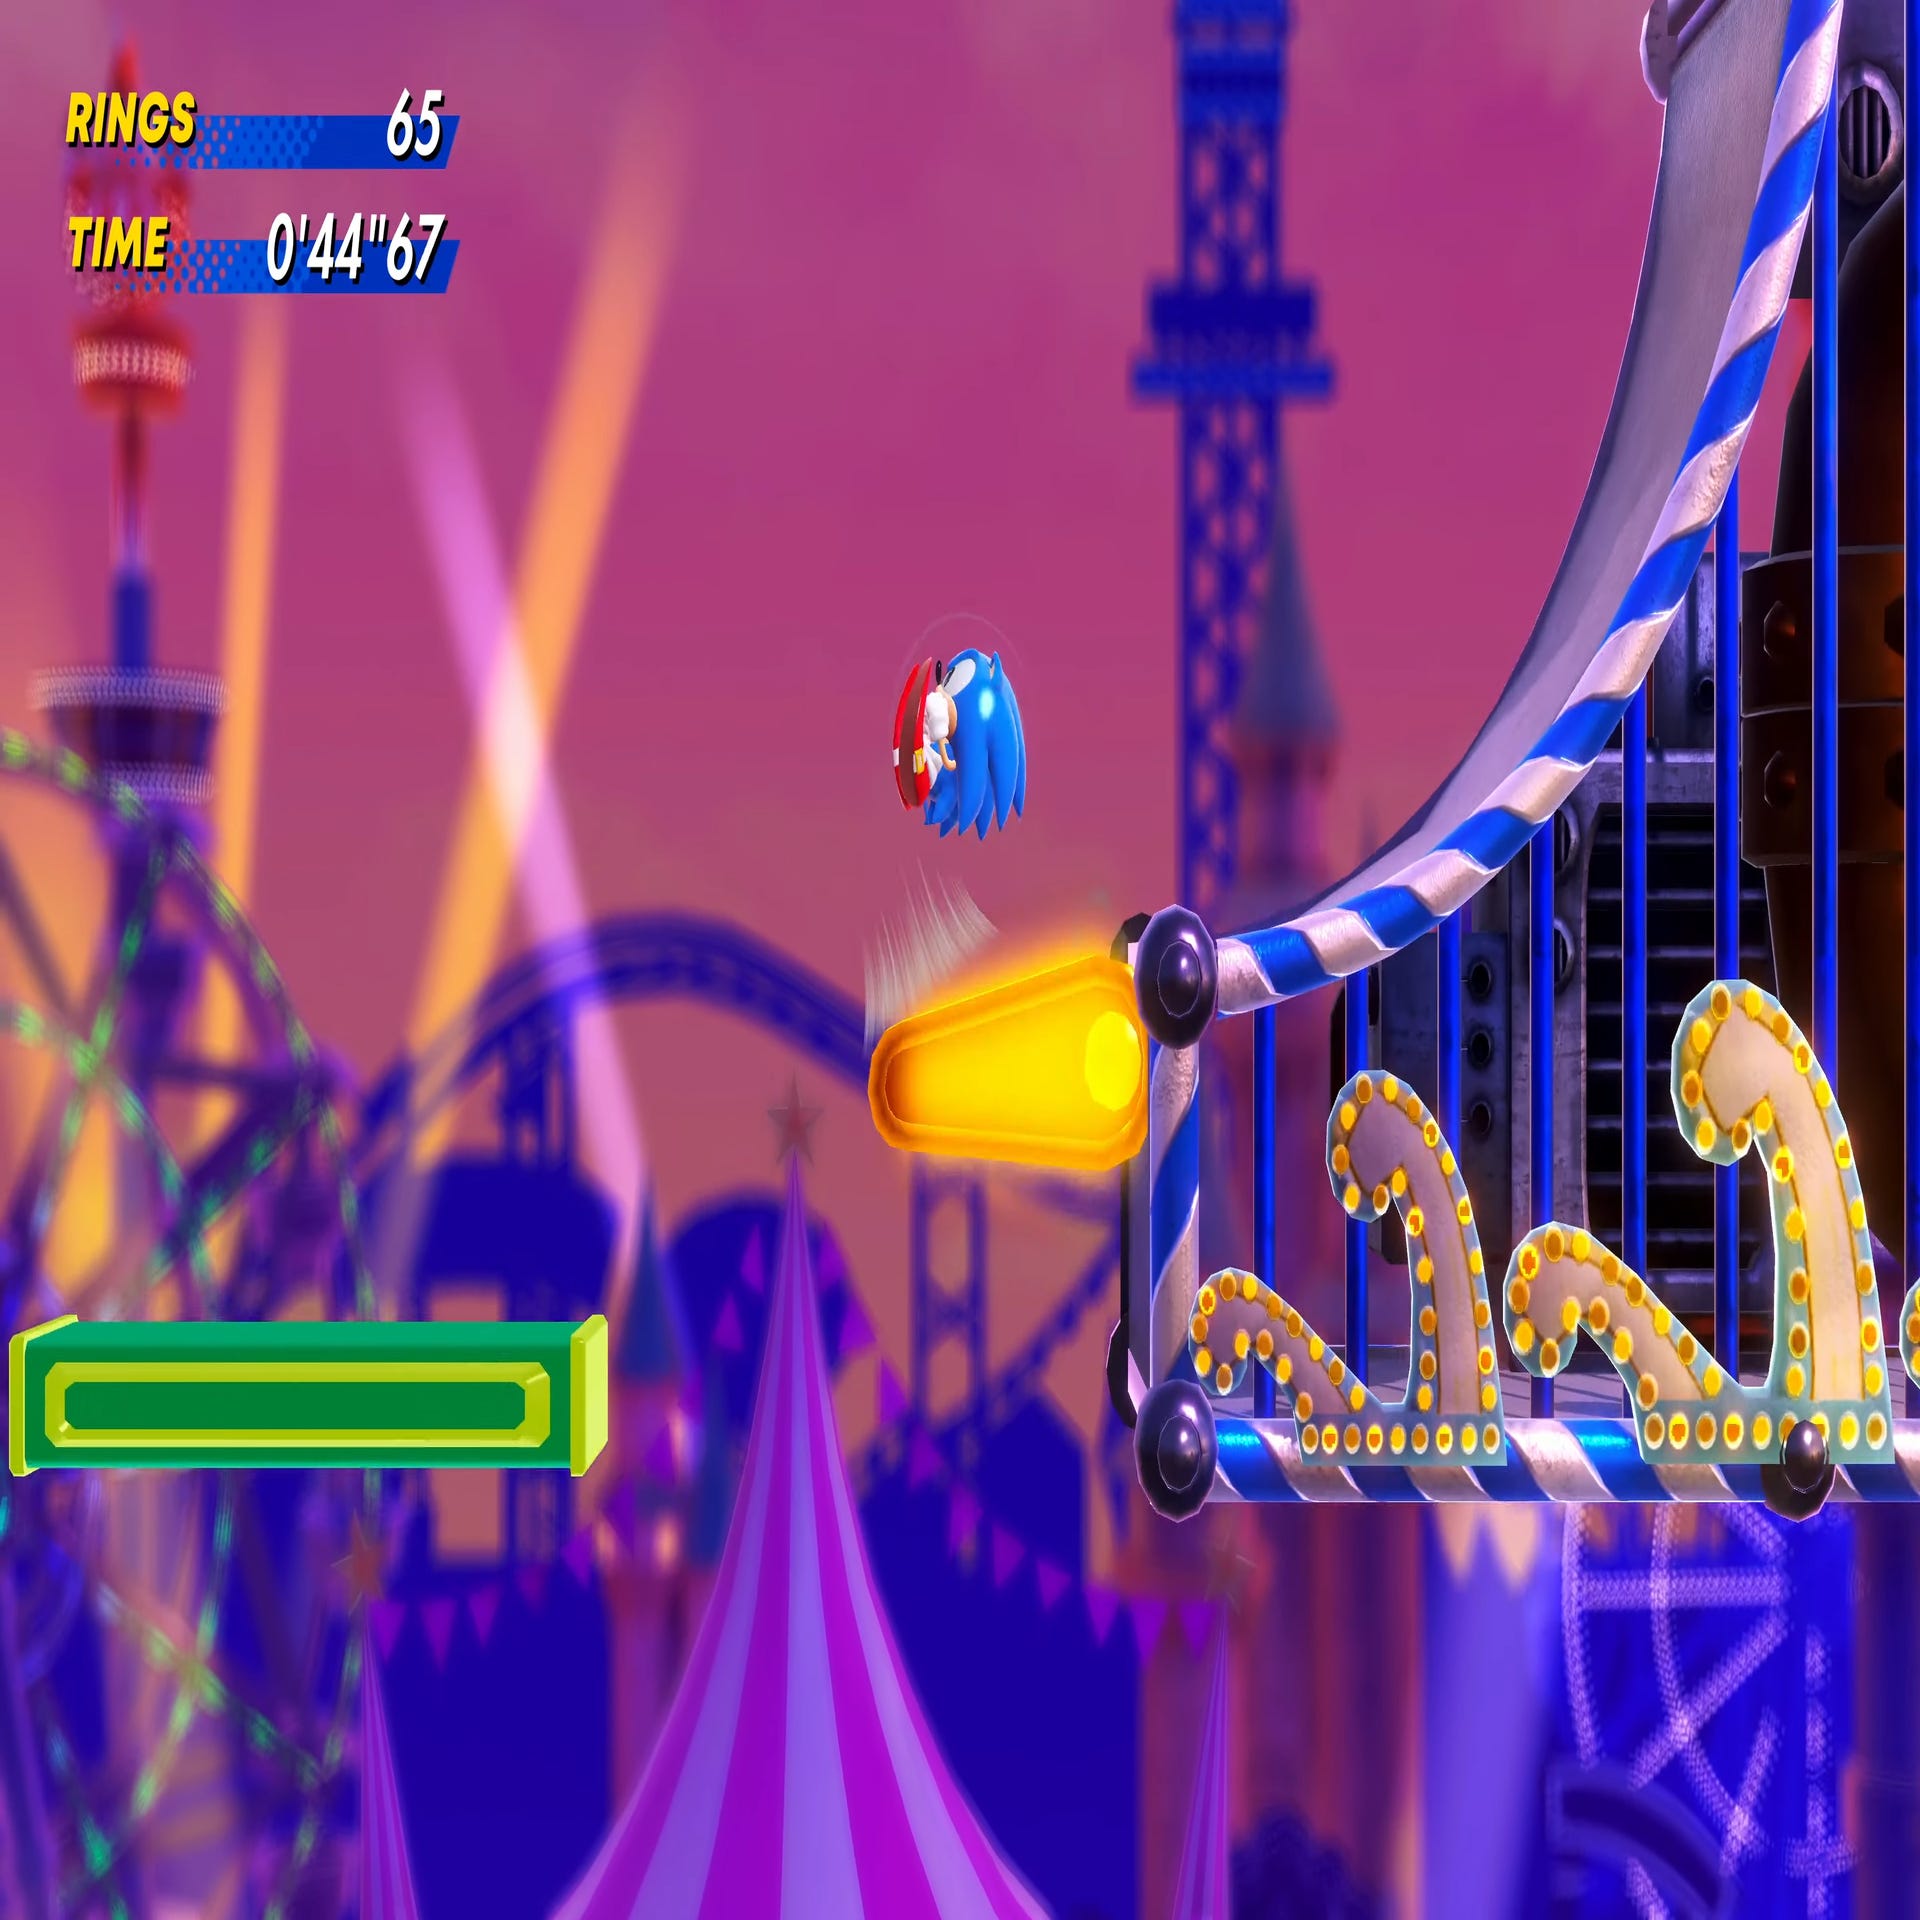 Sonic Superstars (PS5) REVIEW - Decent, Nostalgic Fun - Cultured